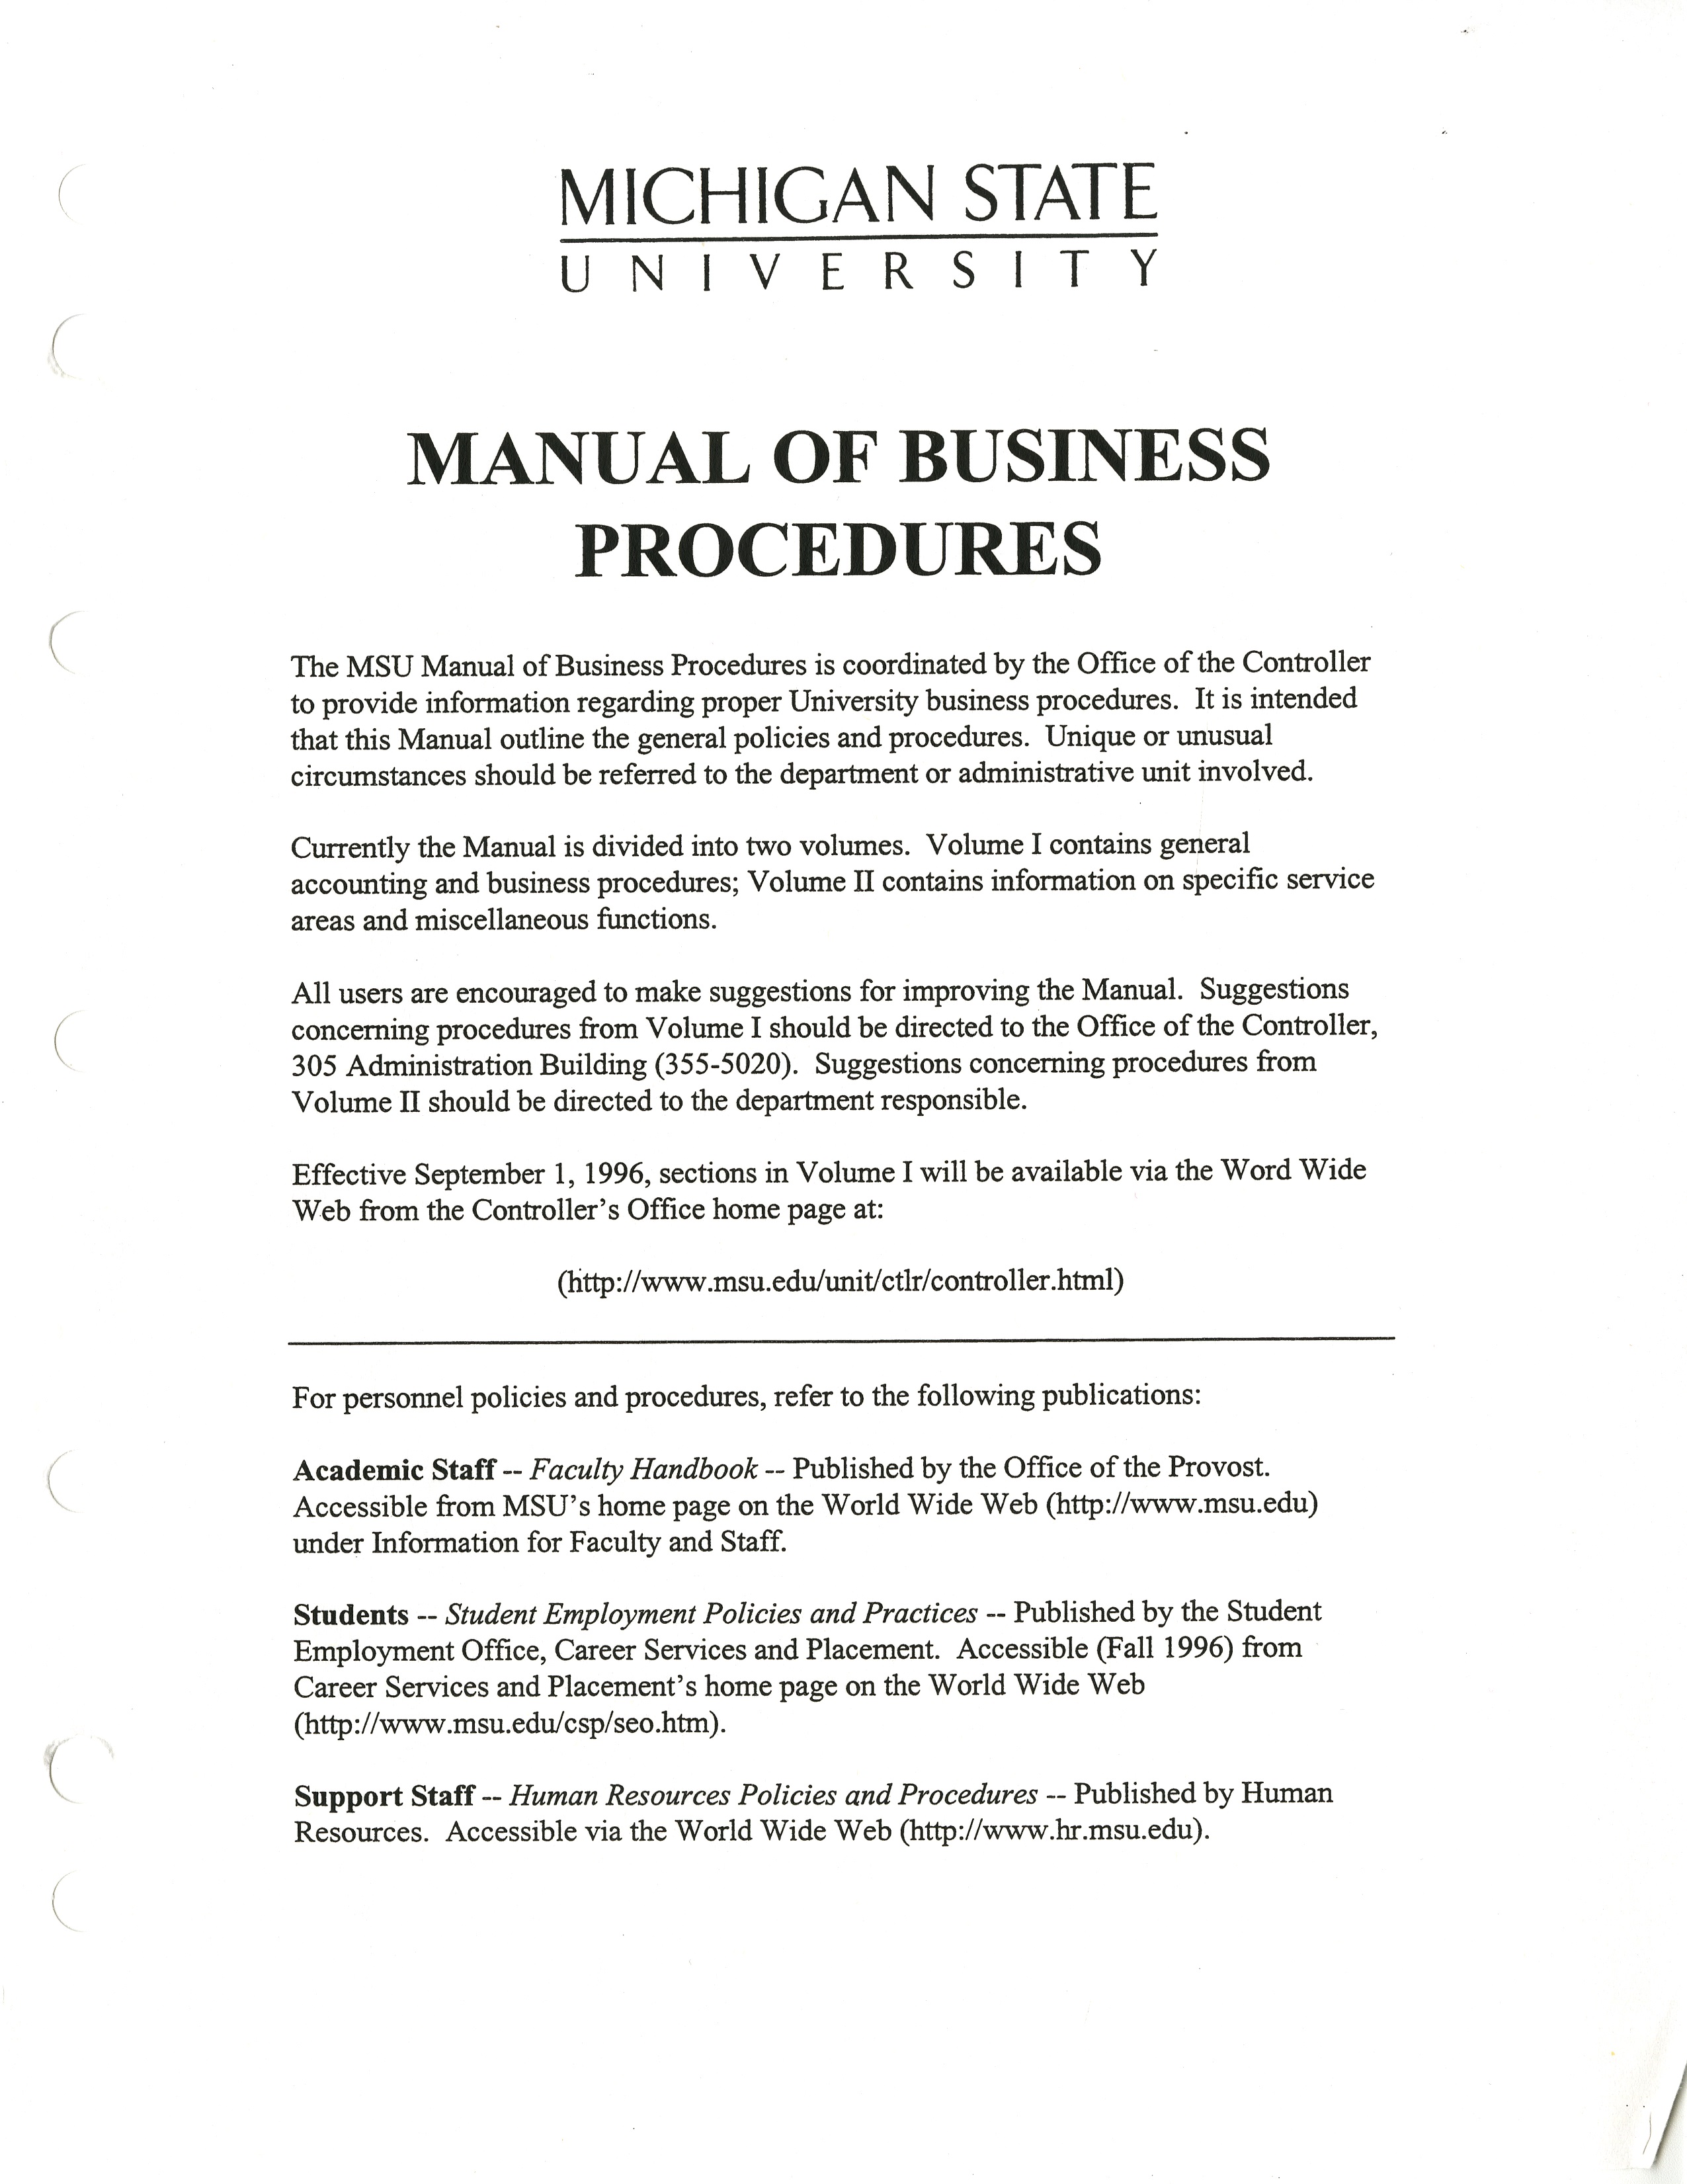 MSU Manual of Business Procedures, 1996-1998